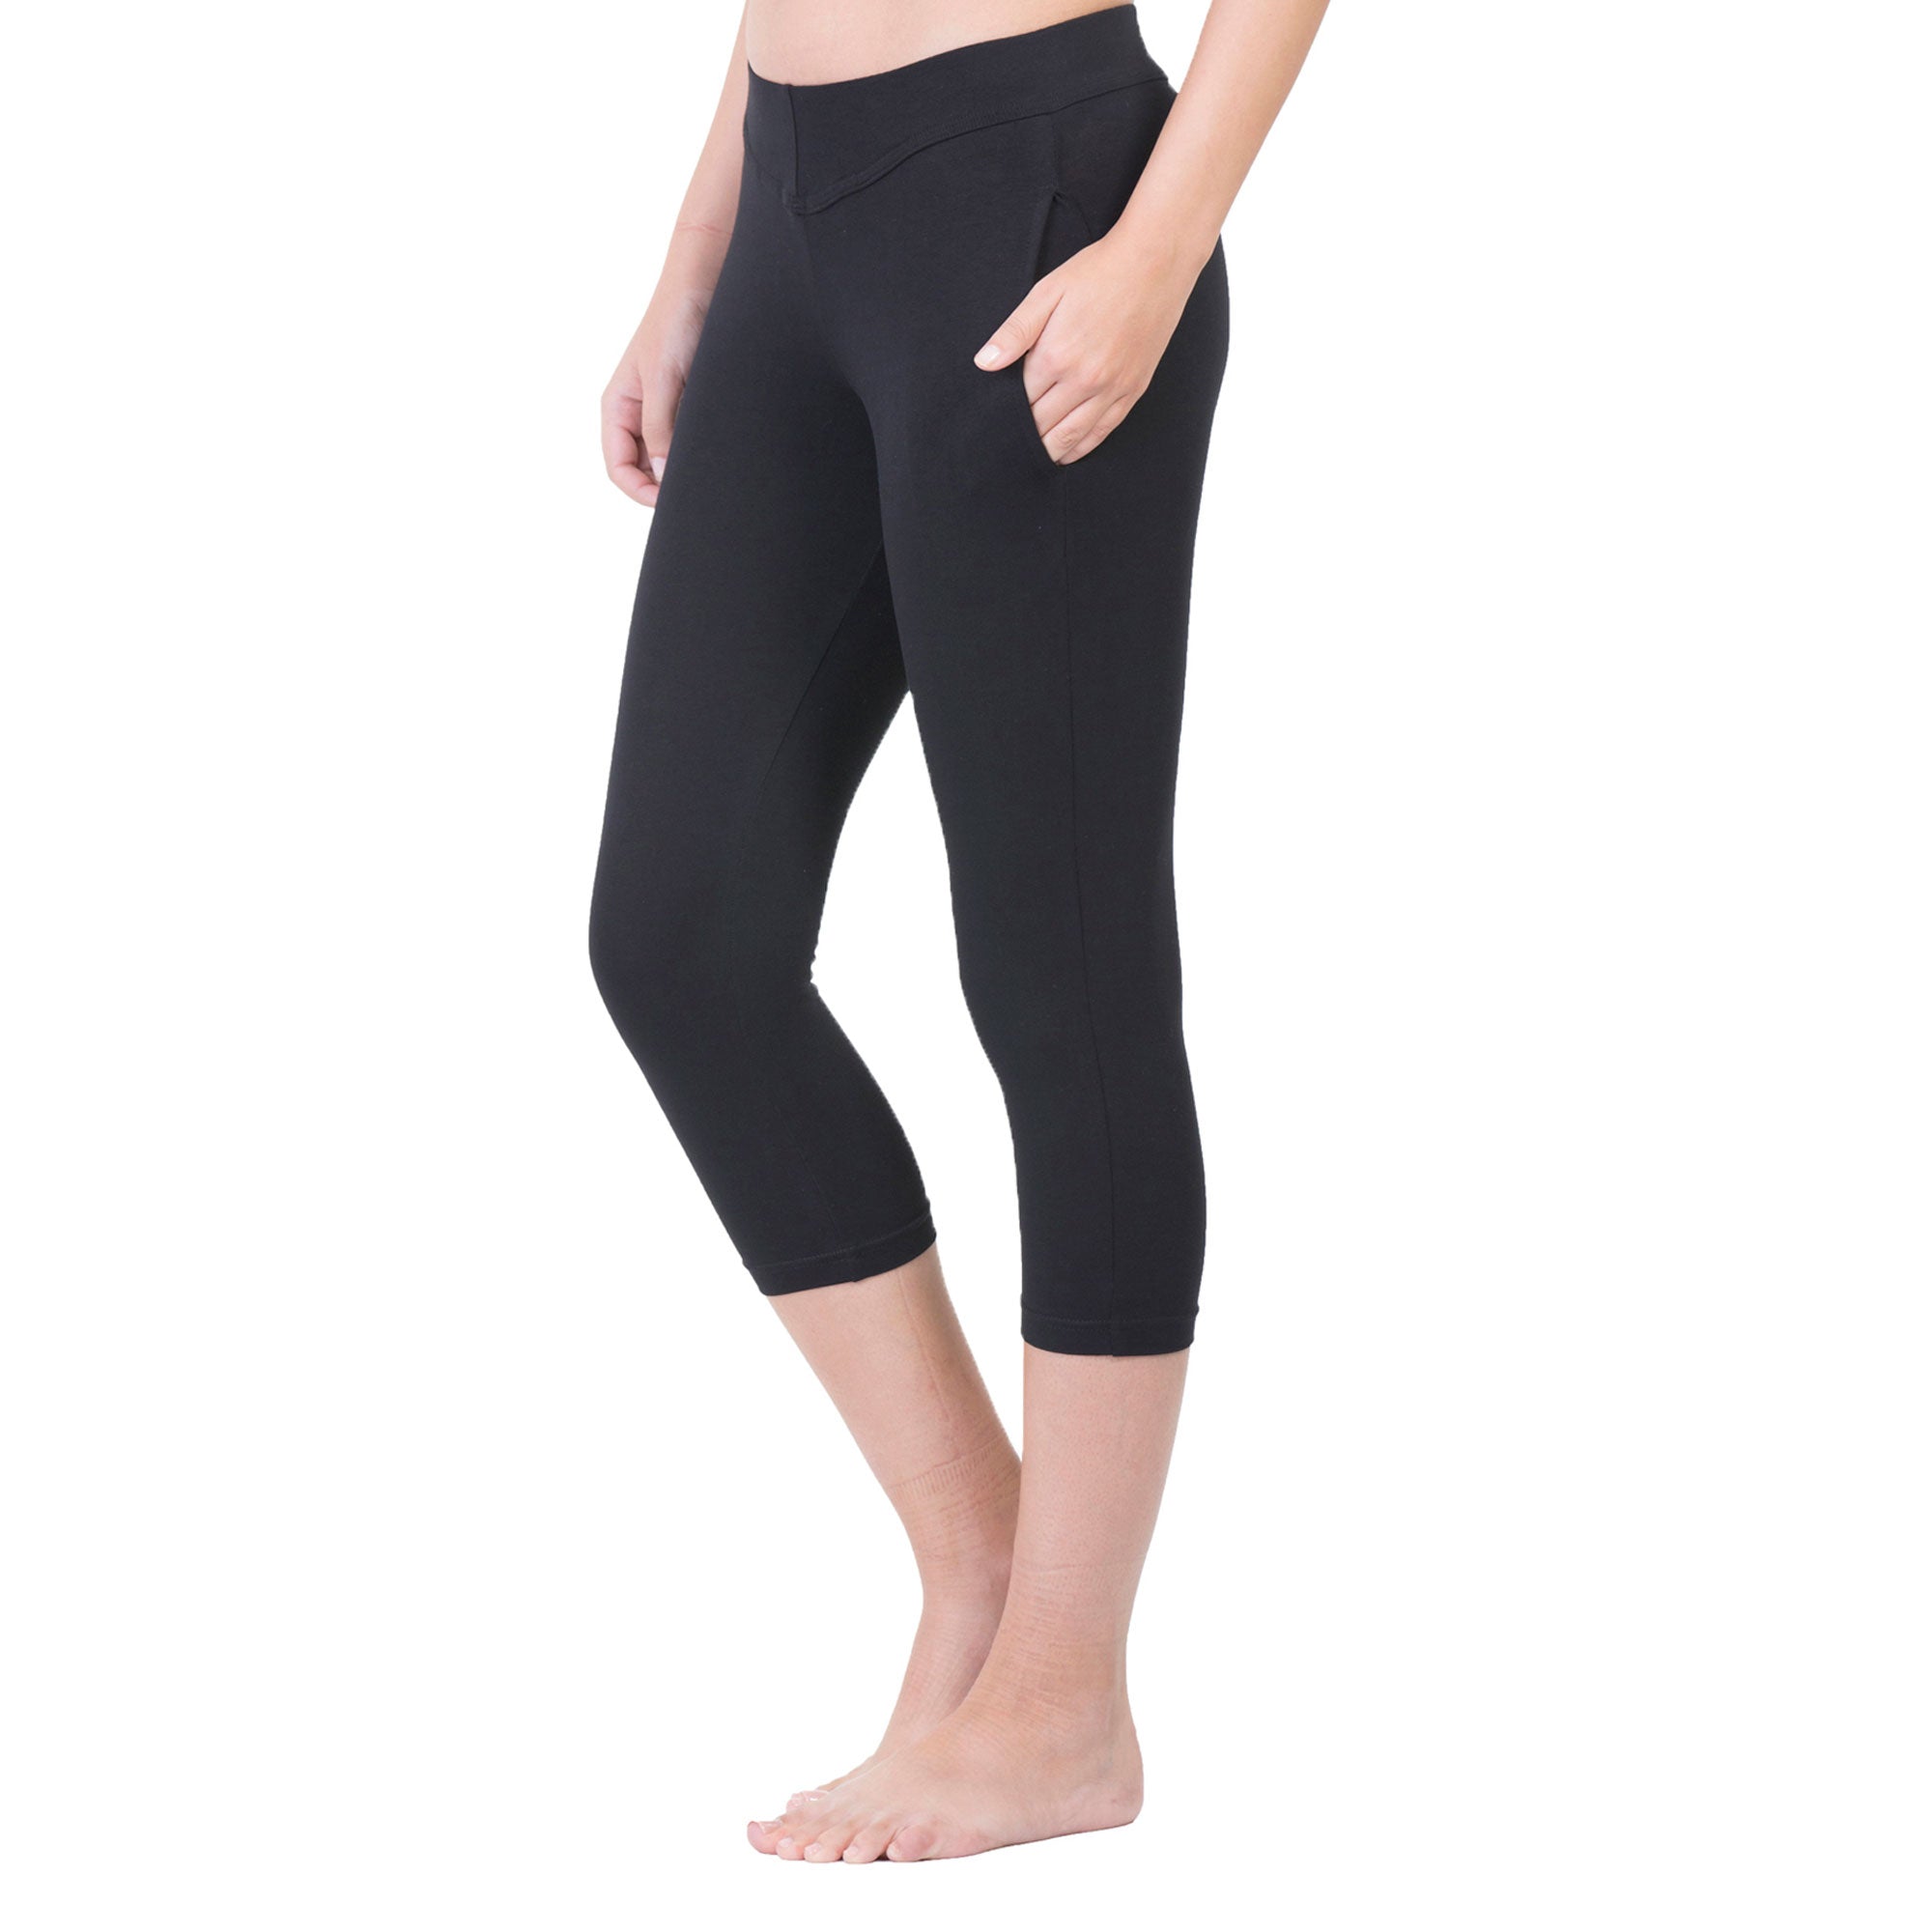 spants Women's Regular Fit Plain 3/4th Capri Pants